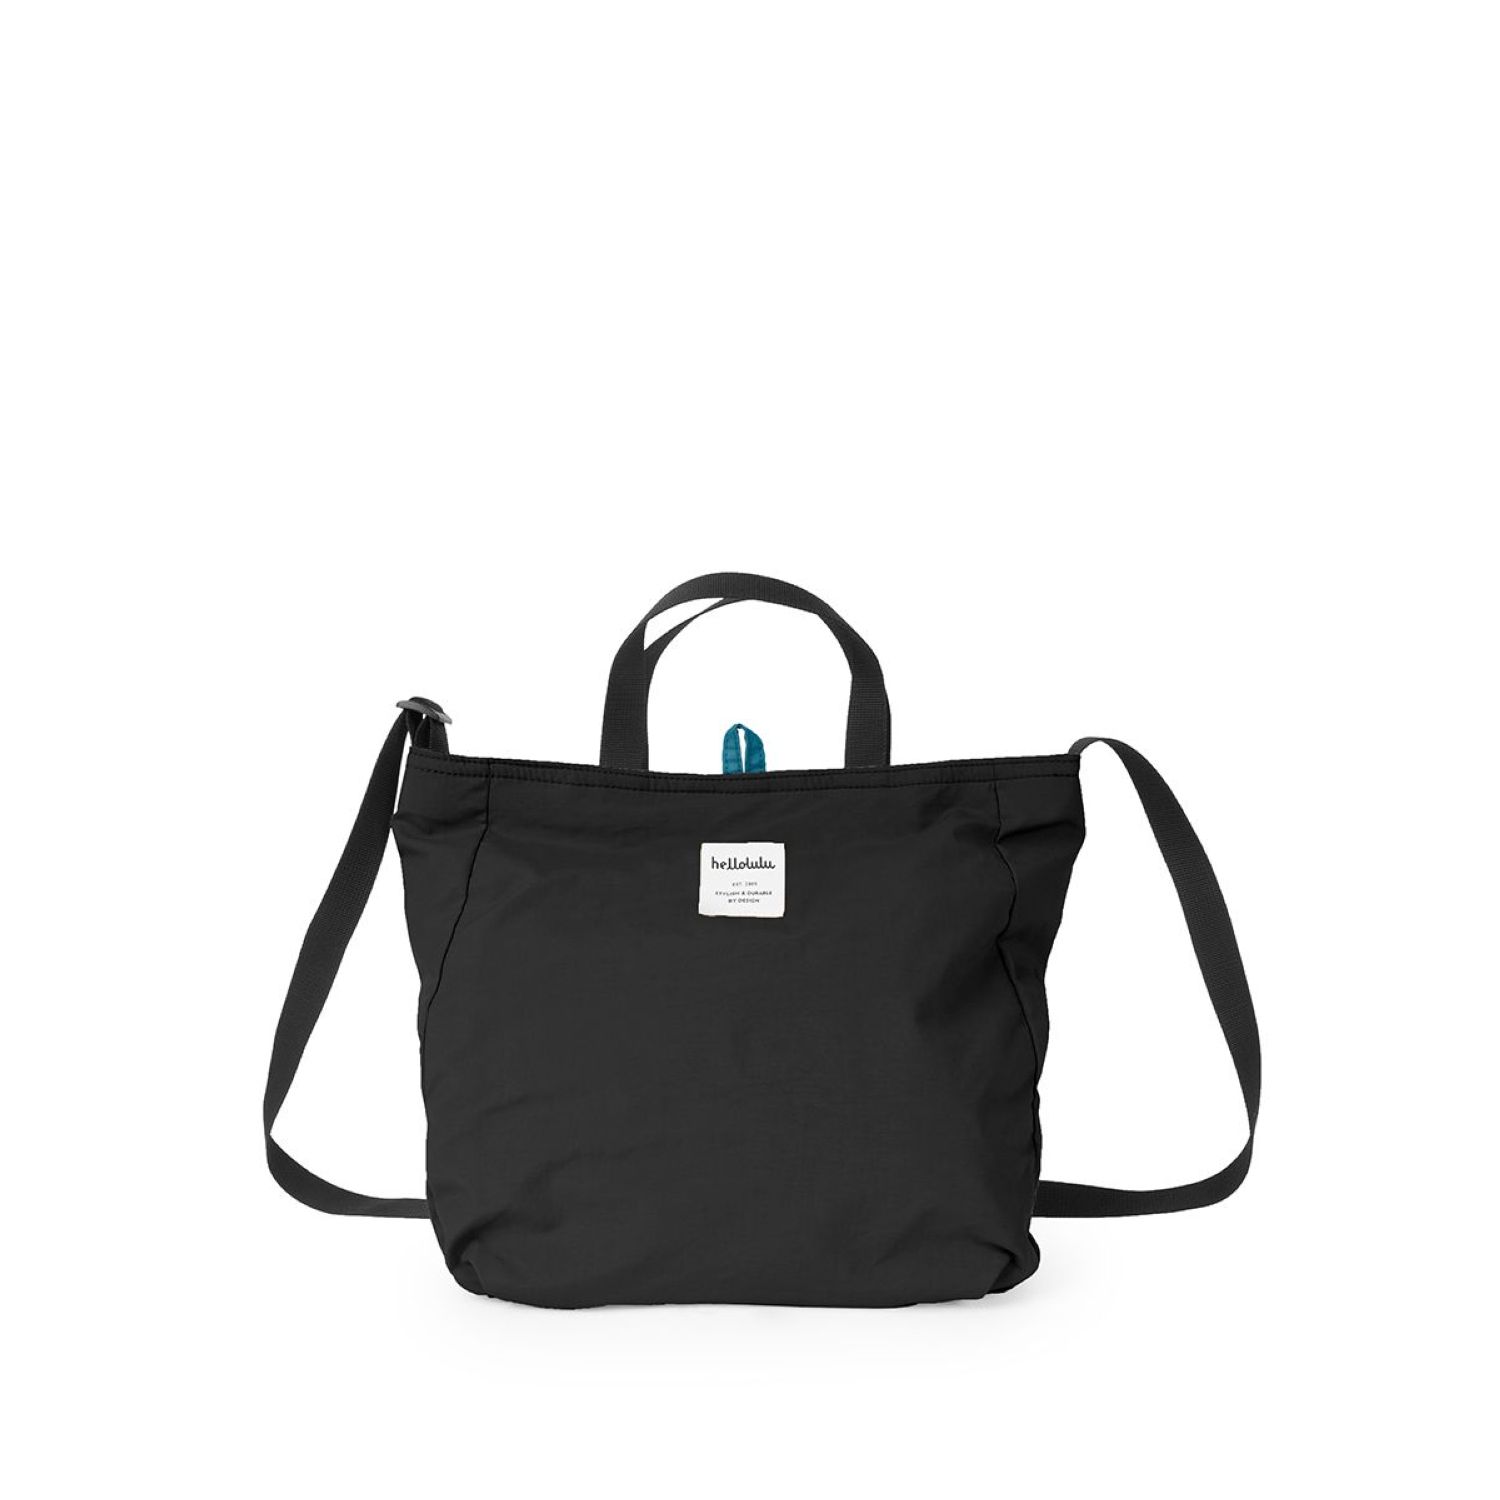 Buy Hellolulu Jolie Double Sided 2 Way Shoulder Bag (Black/Marine Blue ...